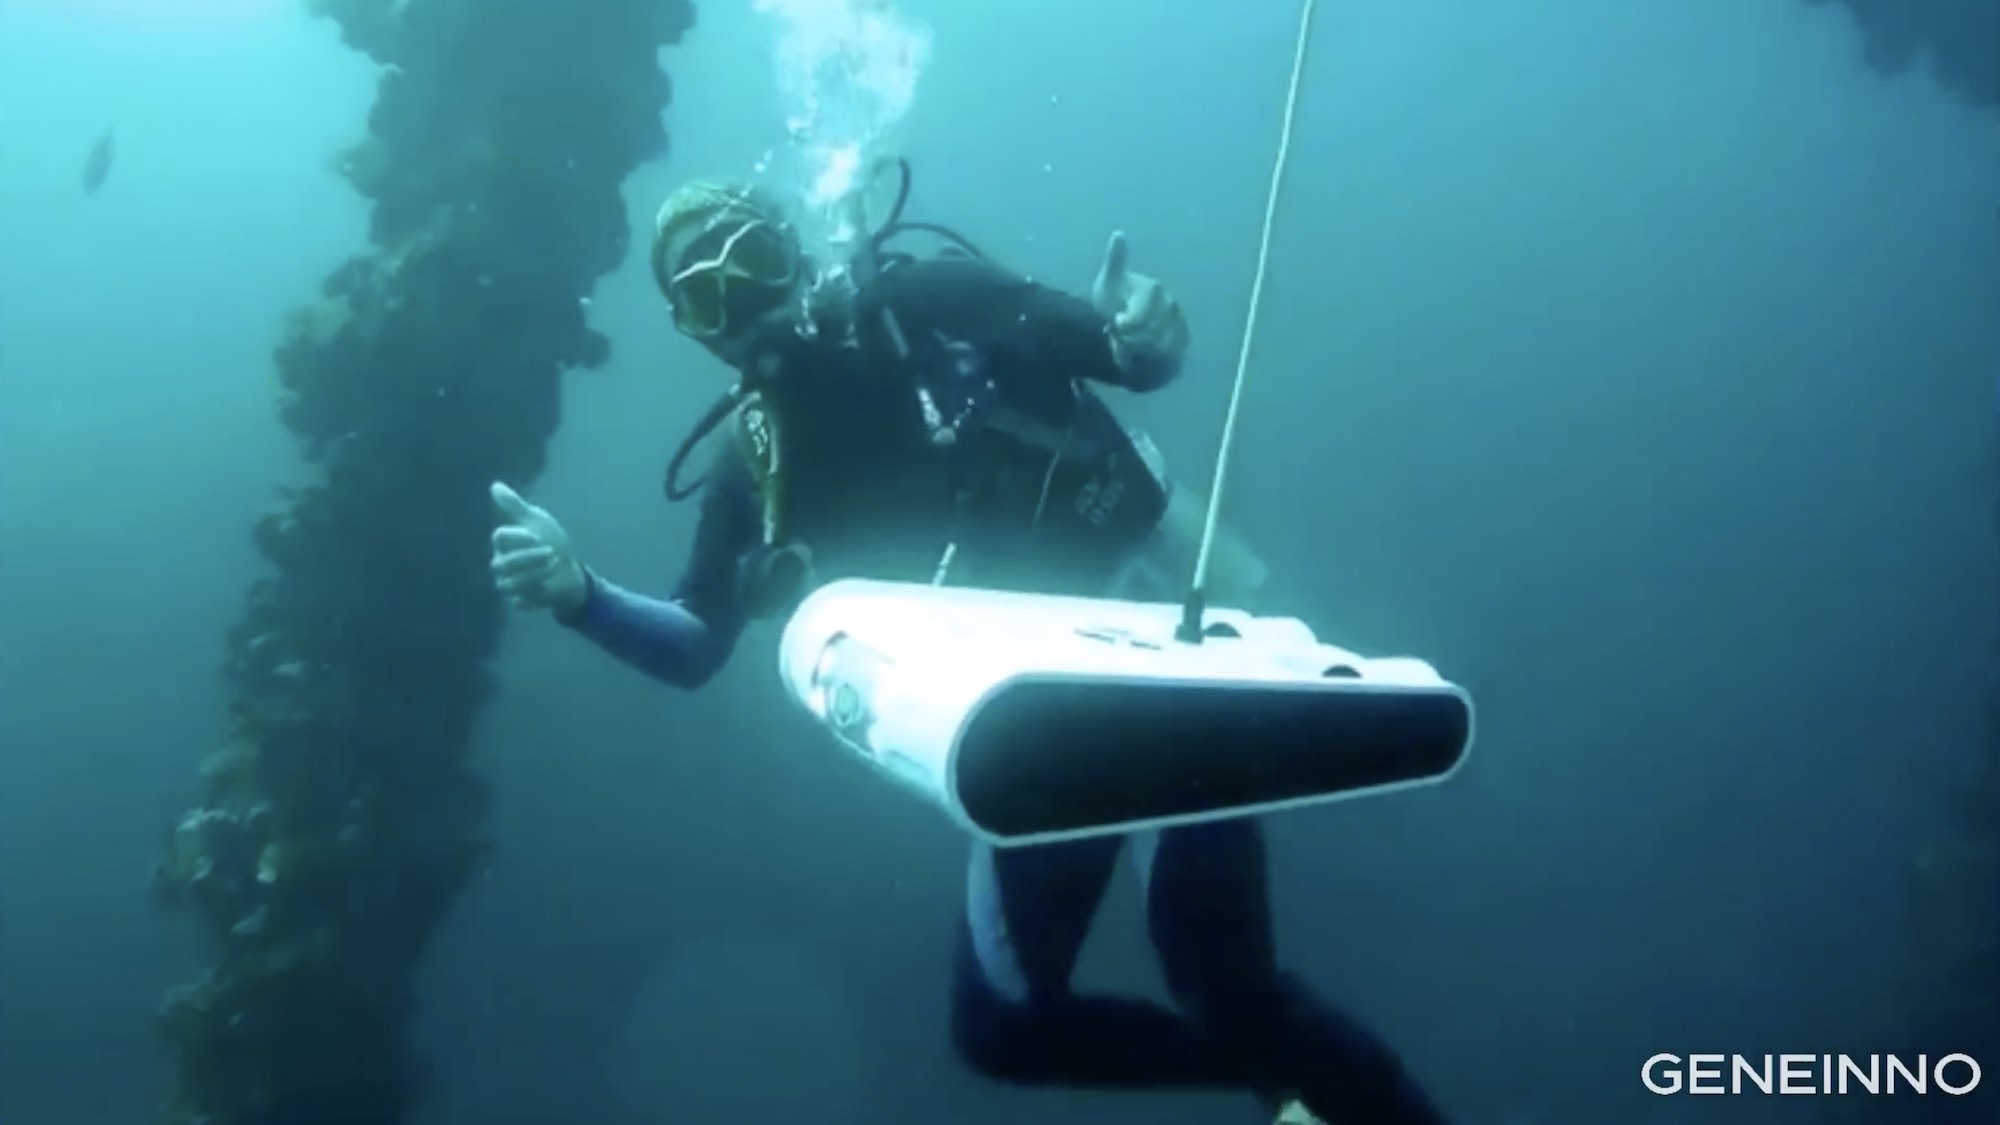 Geneinno's Poseidon 1 underwater drone camera at CES2018